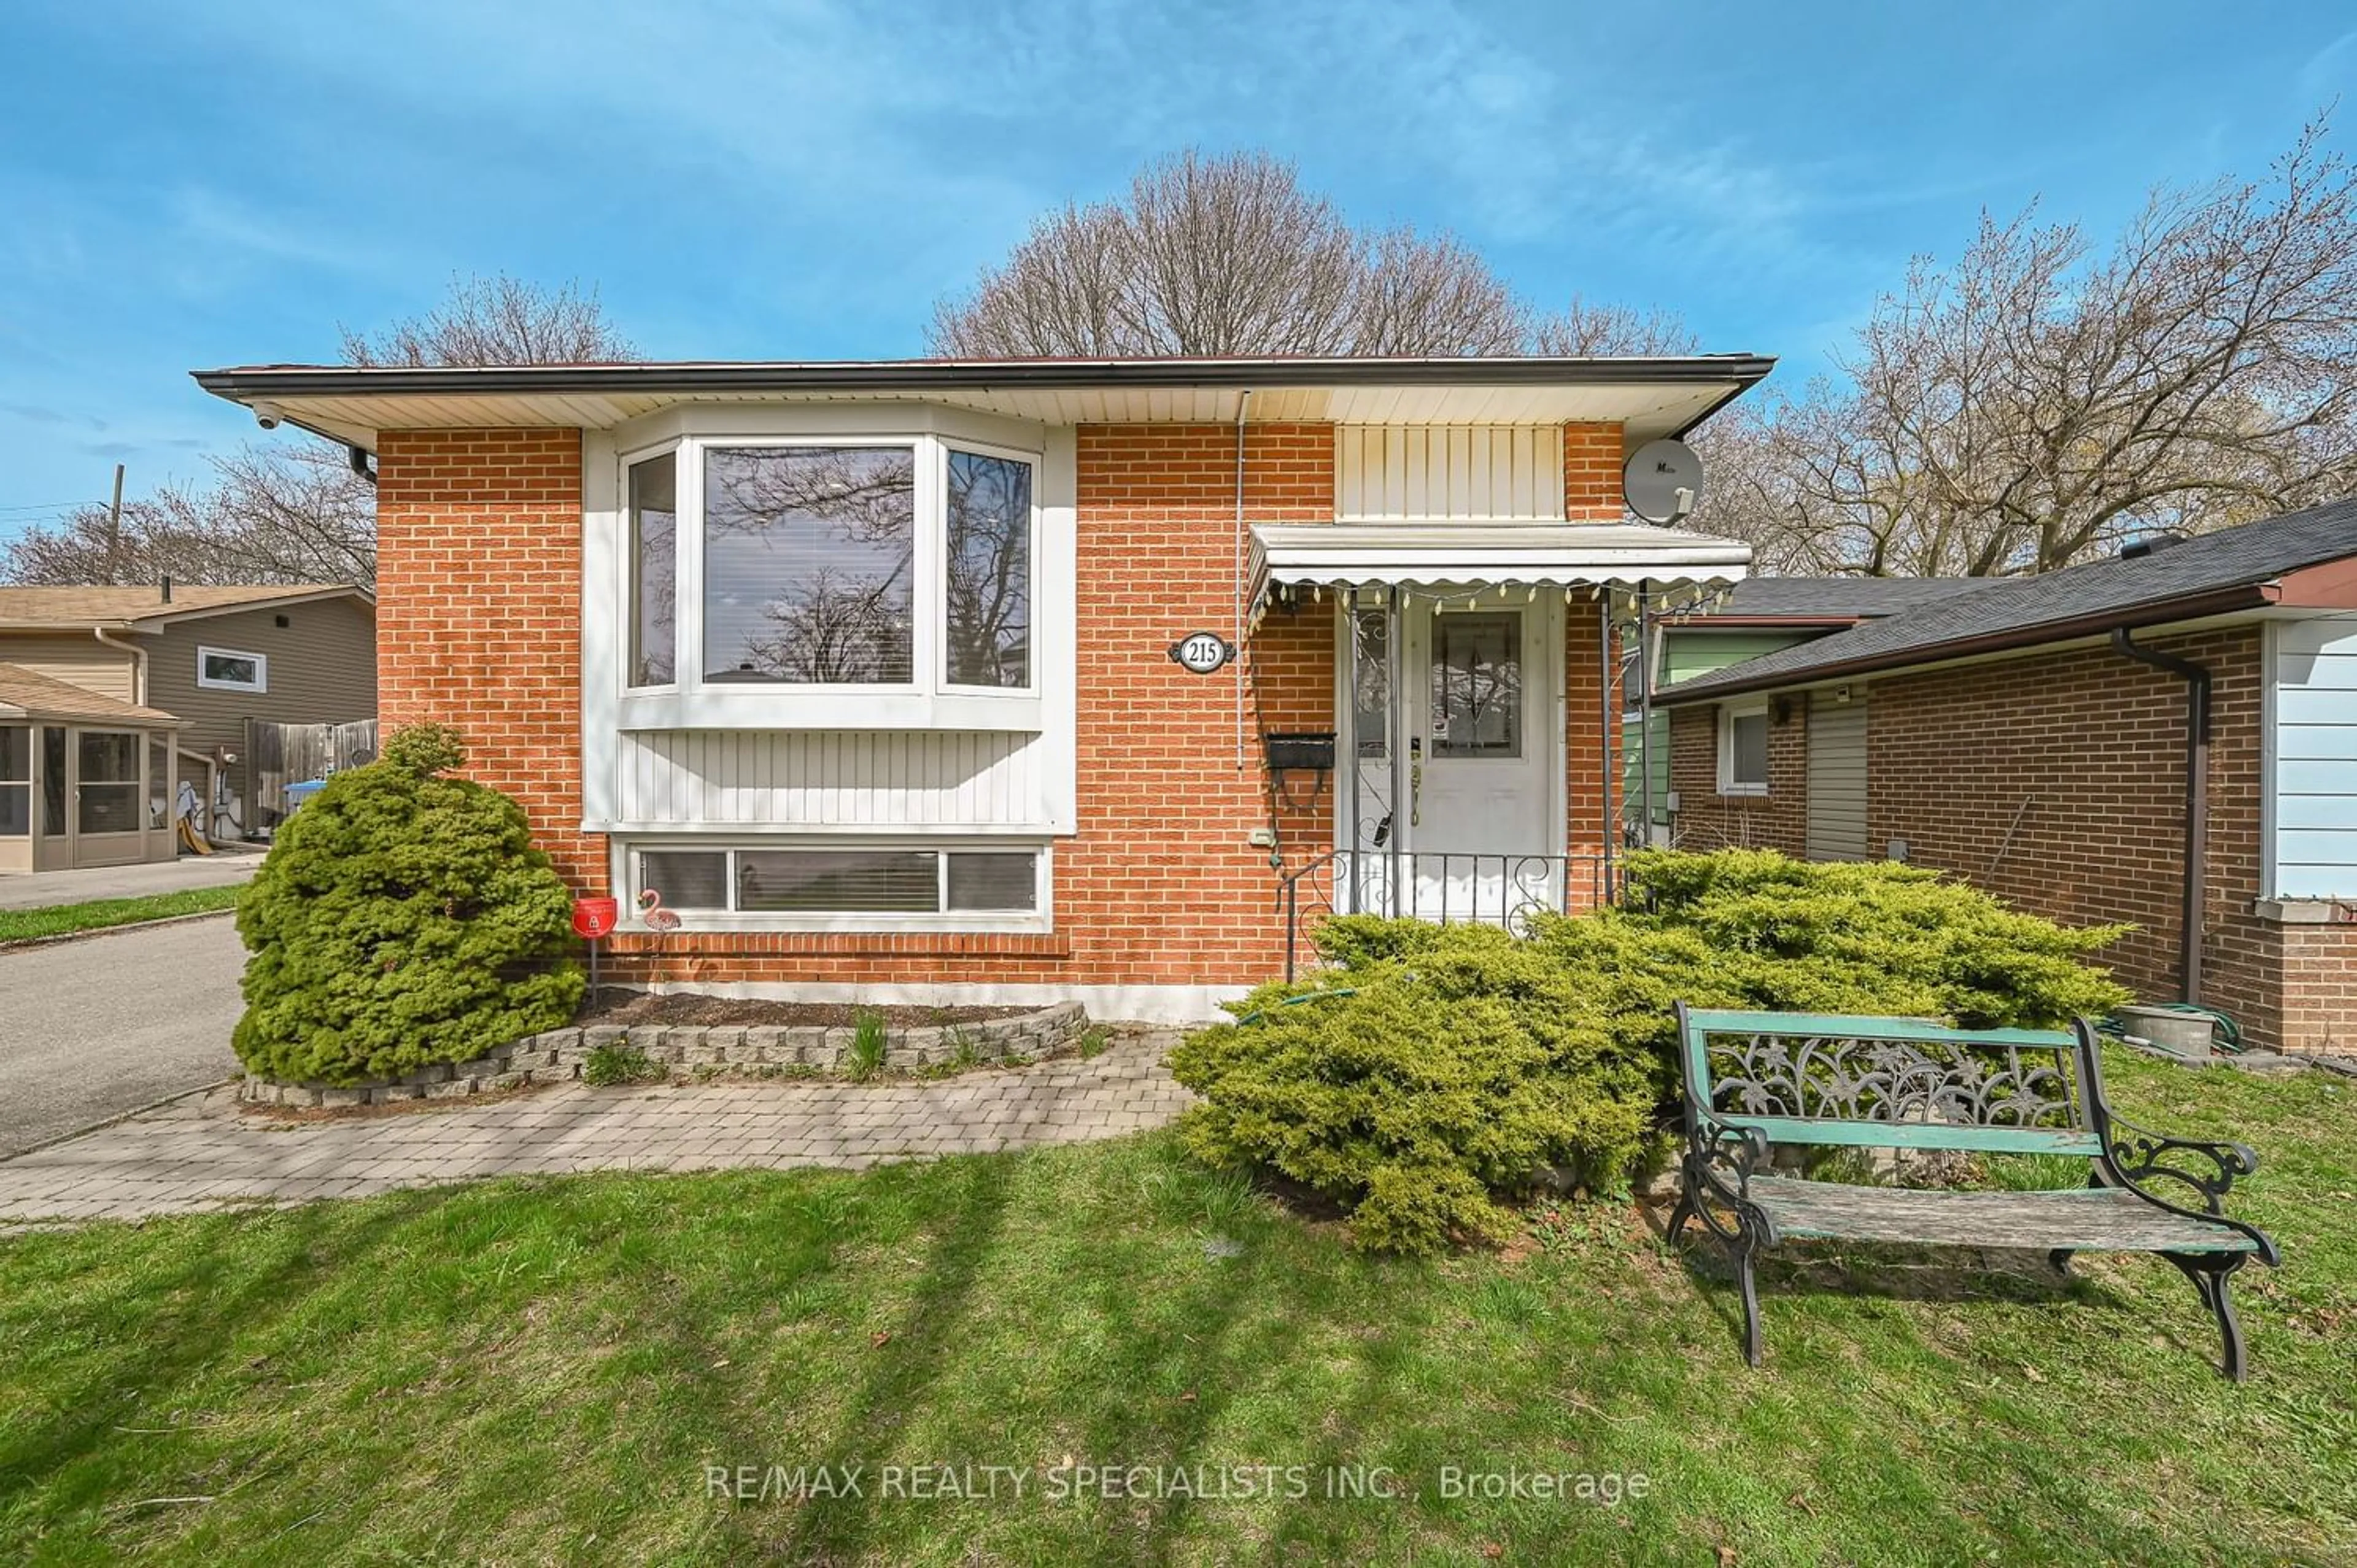 Home with brick exterior material for 215 Archdekin Dr, Brampton Ontario L6V 1V8